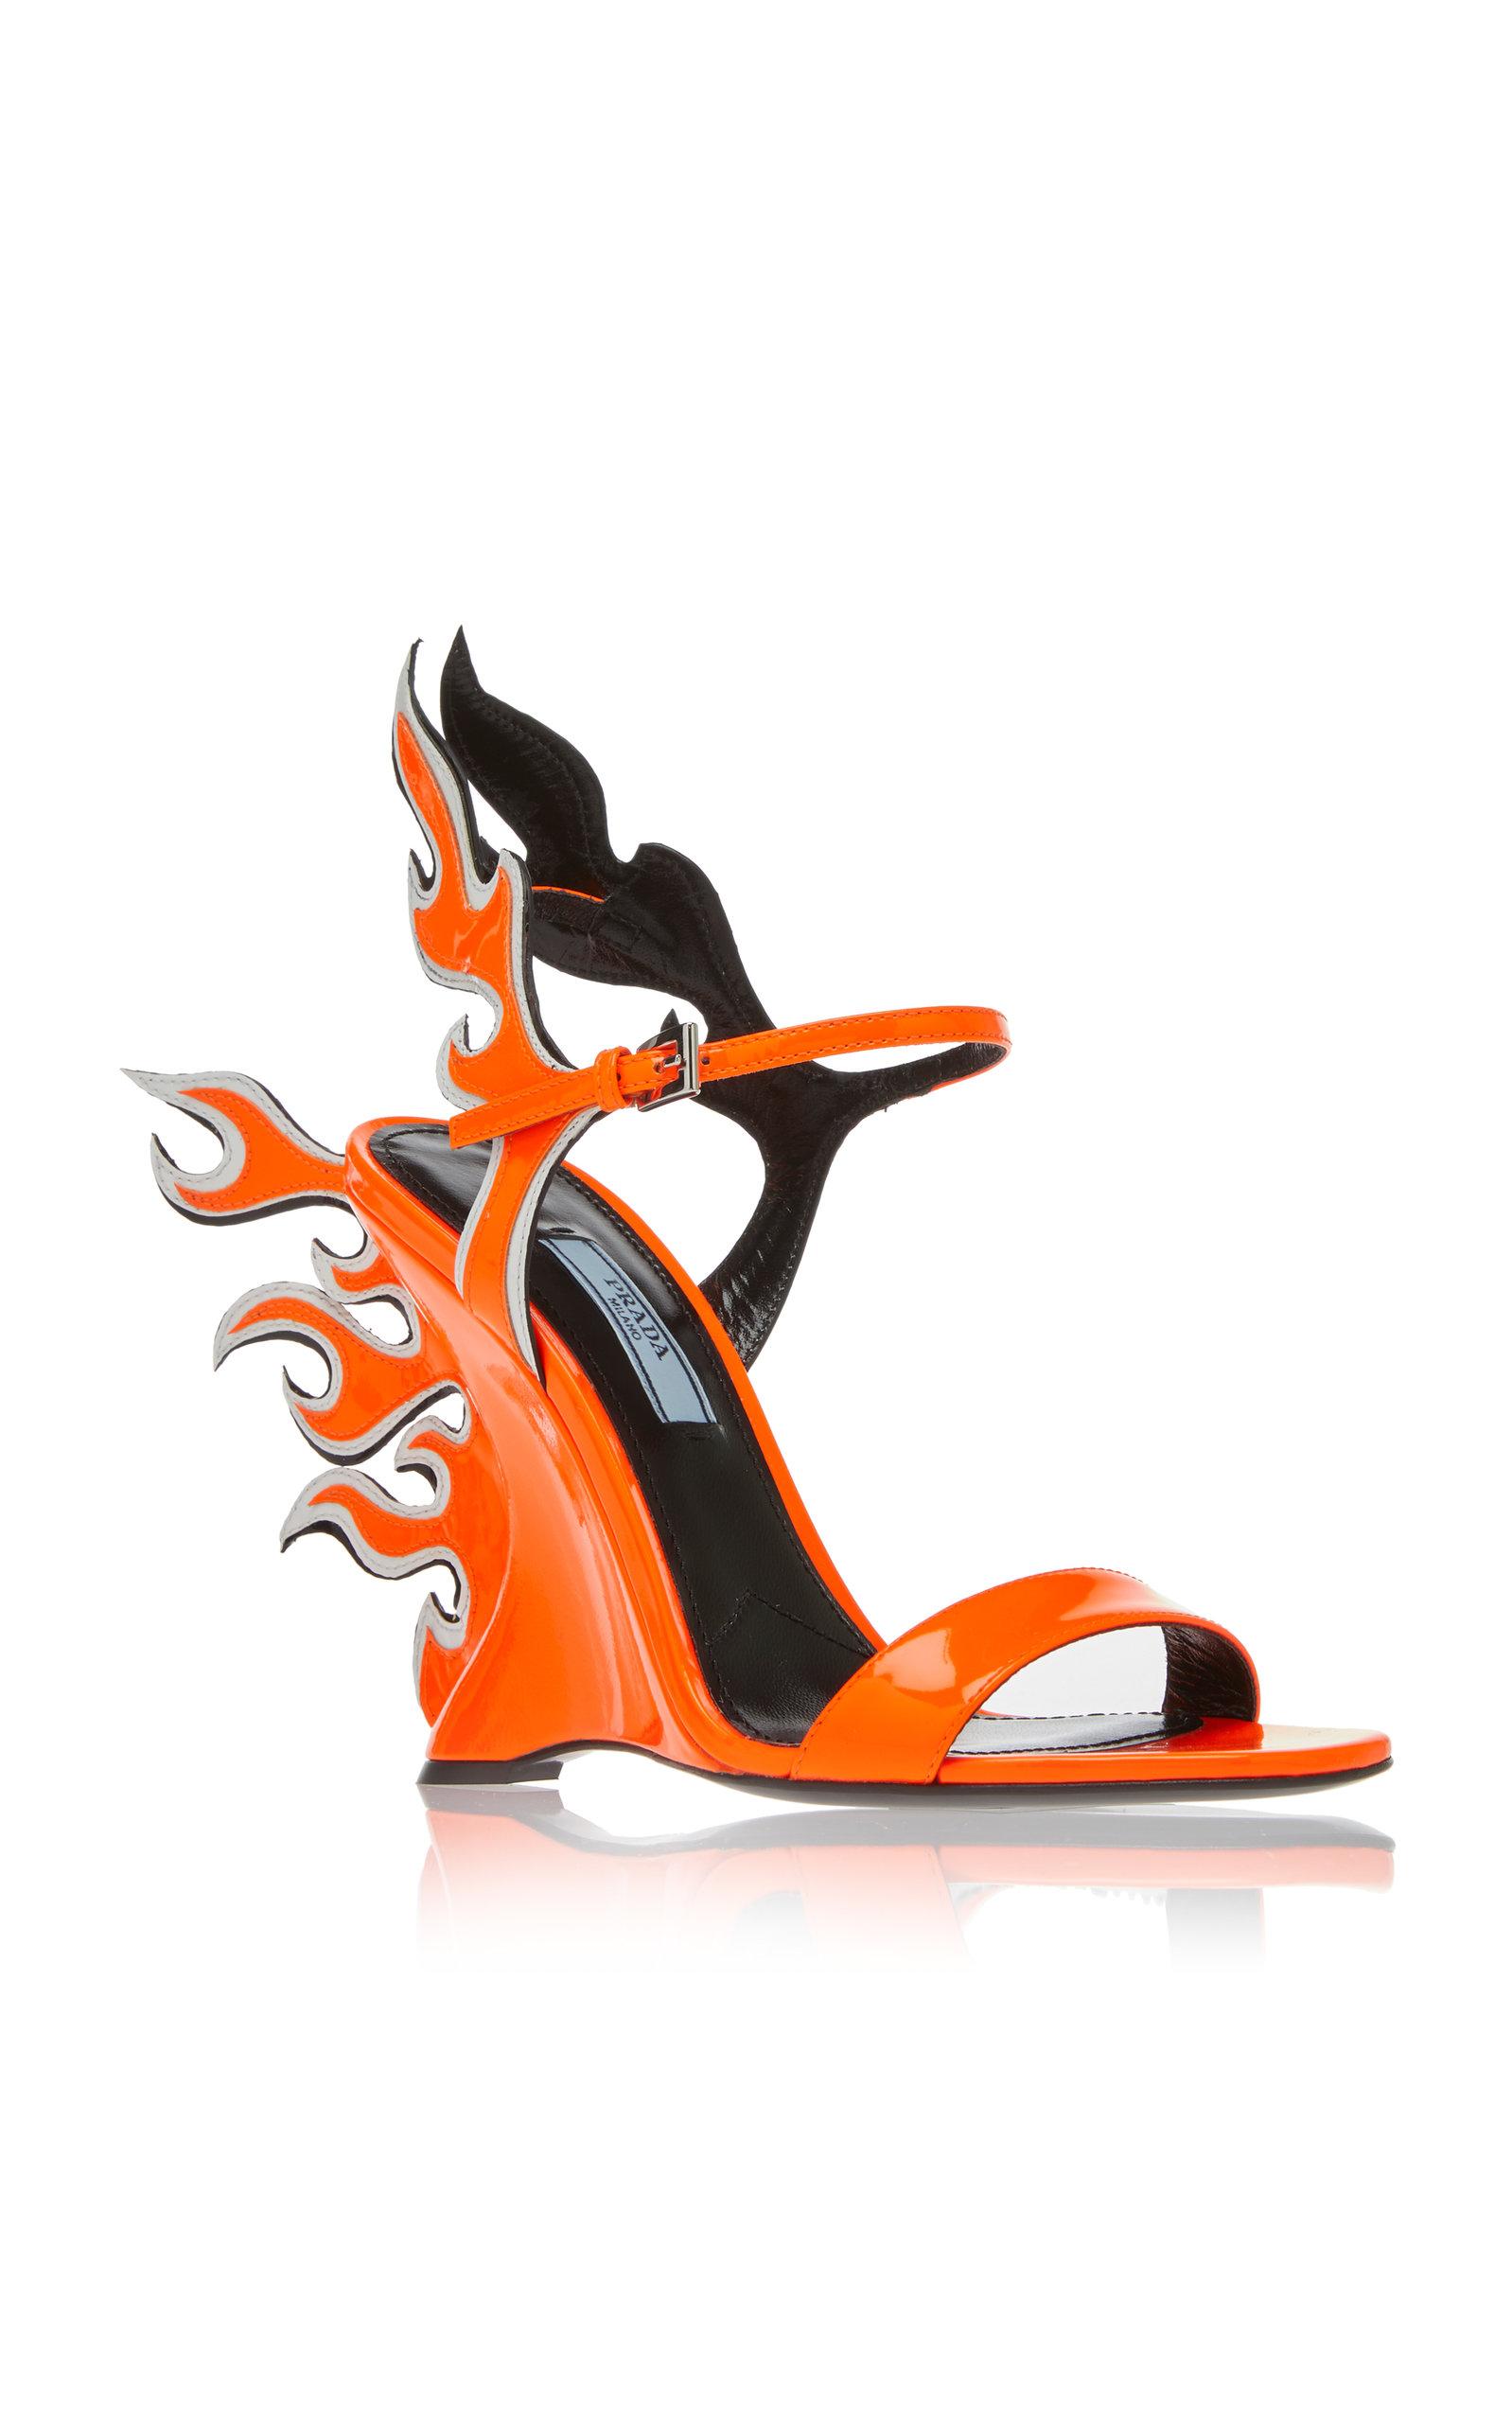 Prada Flame Patent Leather Wedge Sandals in Orange | Lyst